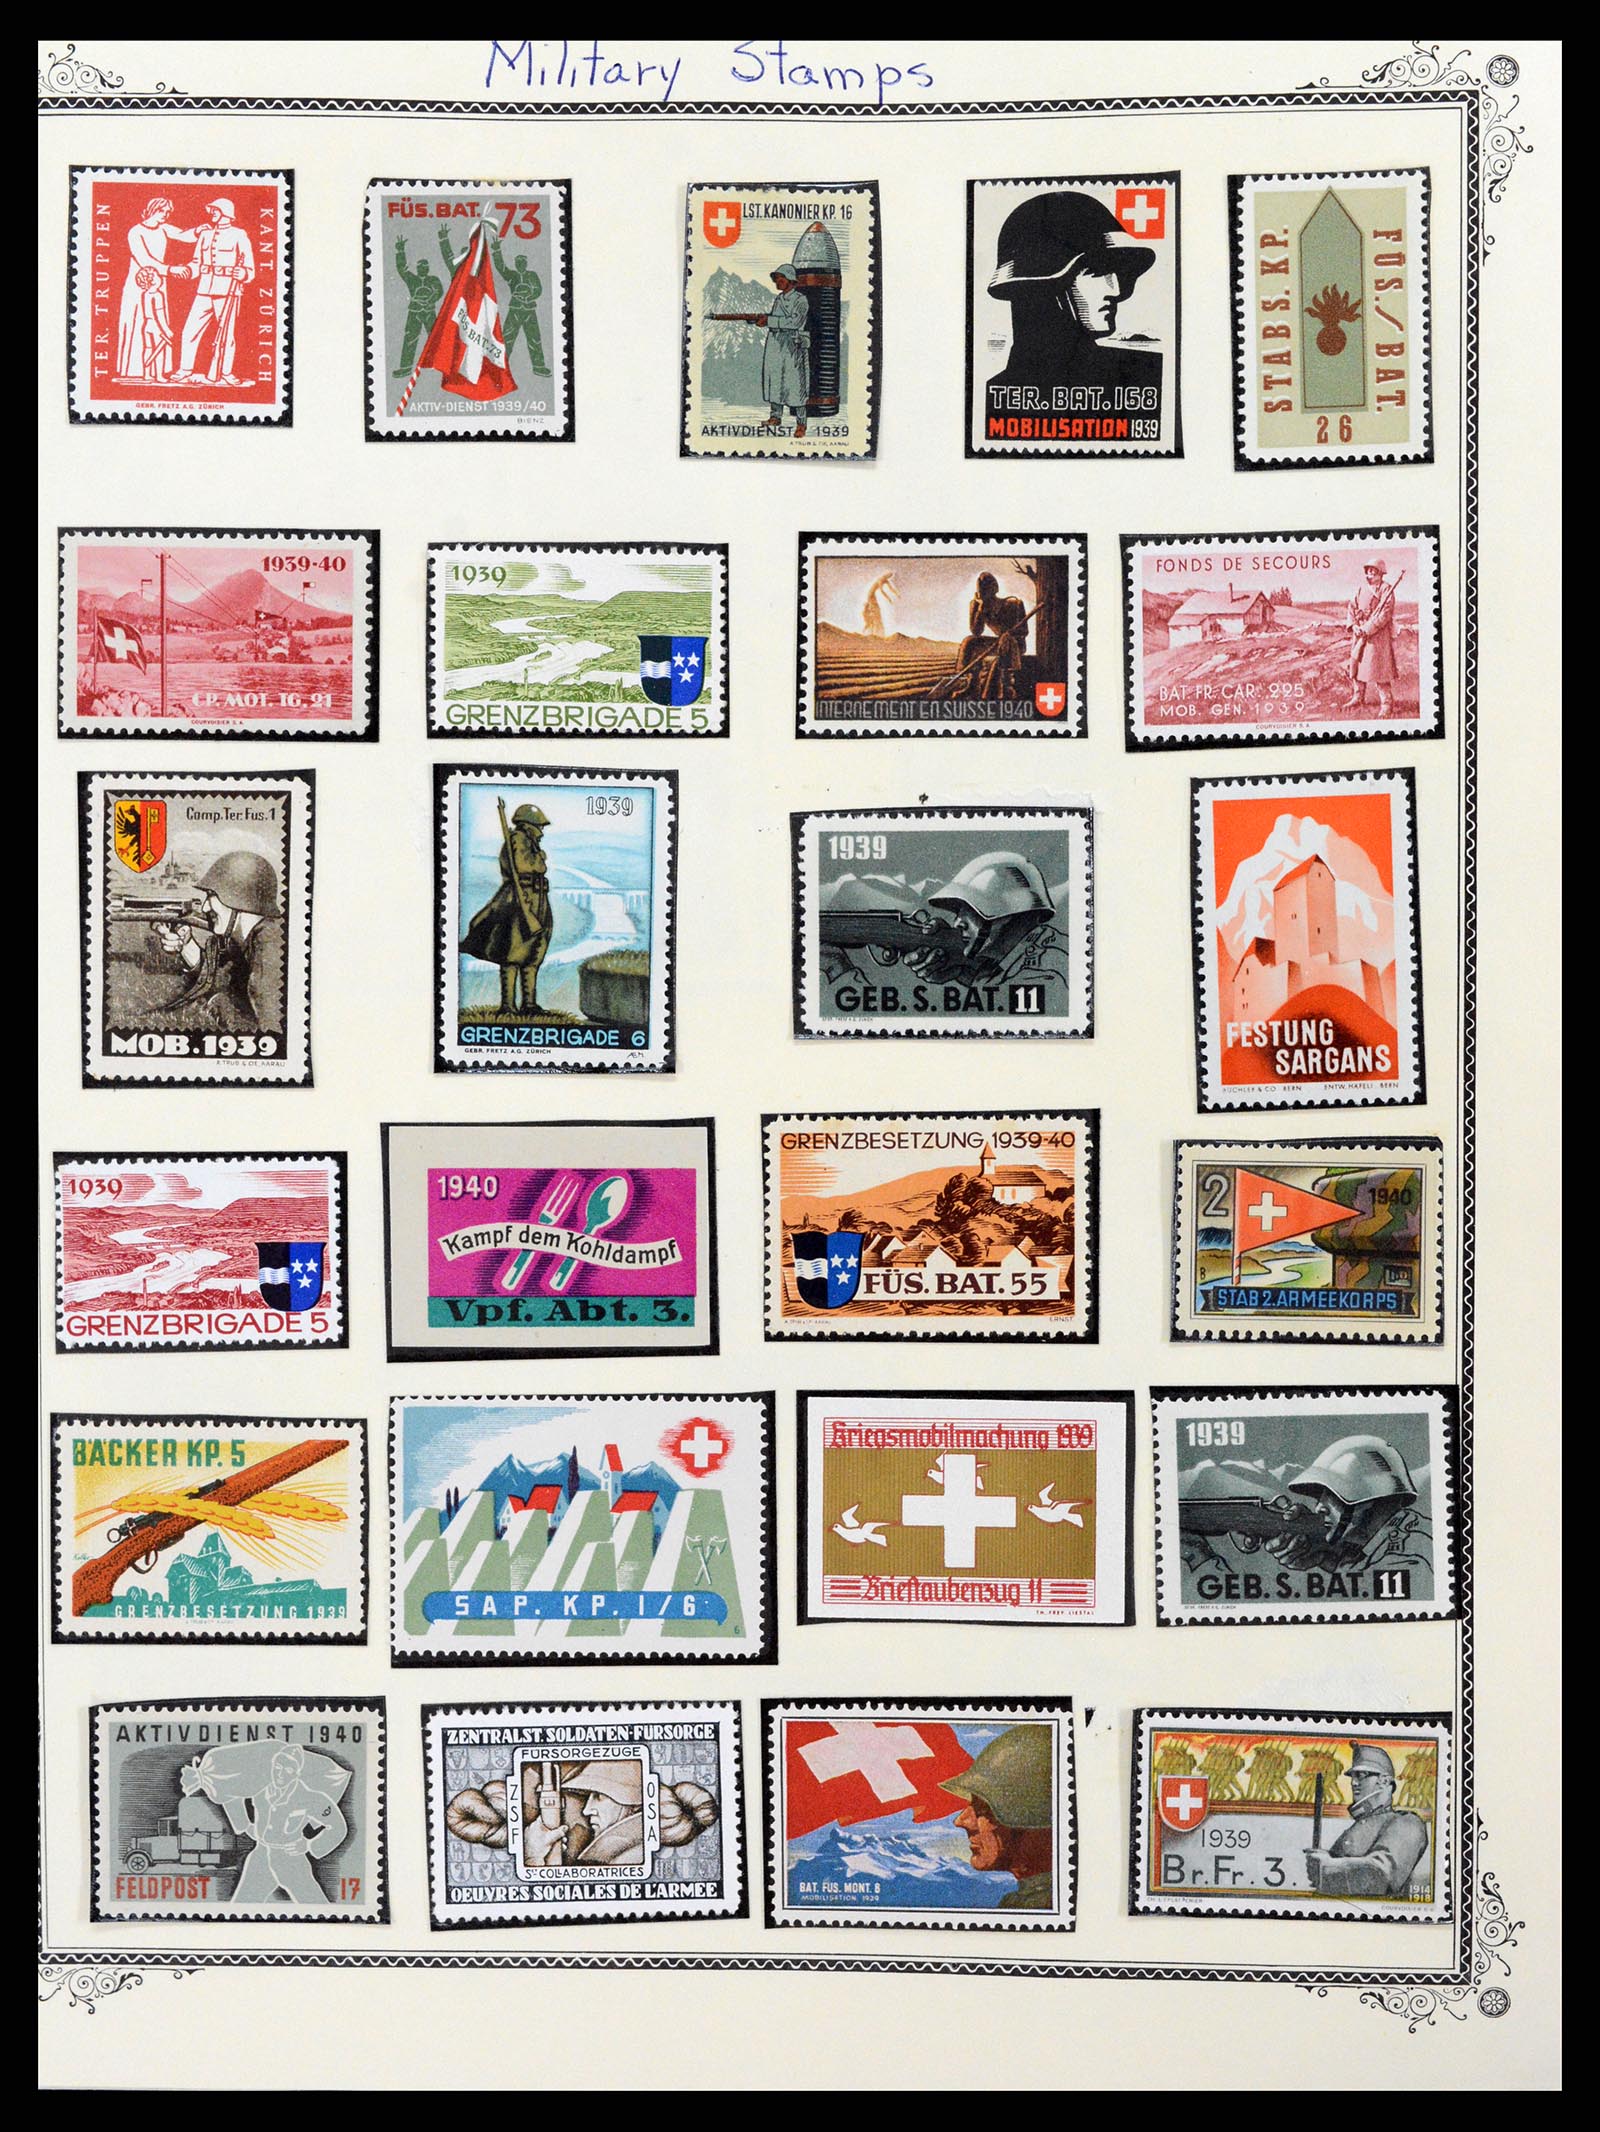 37642 006 - Stamp collection 37642 Switzerland soldier stamps 1914-1945.